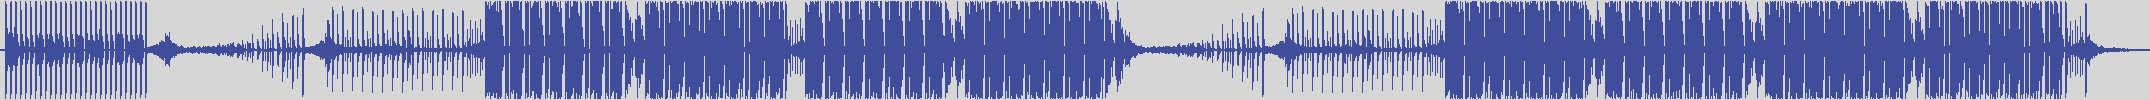 nf_boyz_records [NFY033] Frank Falcon - Verification Key [Manhattan Friends Mix] audio wave form